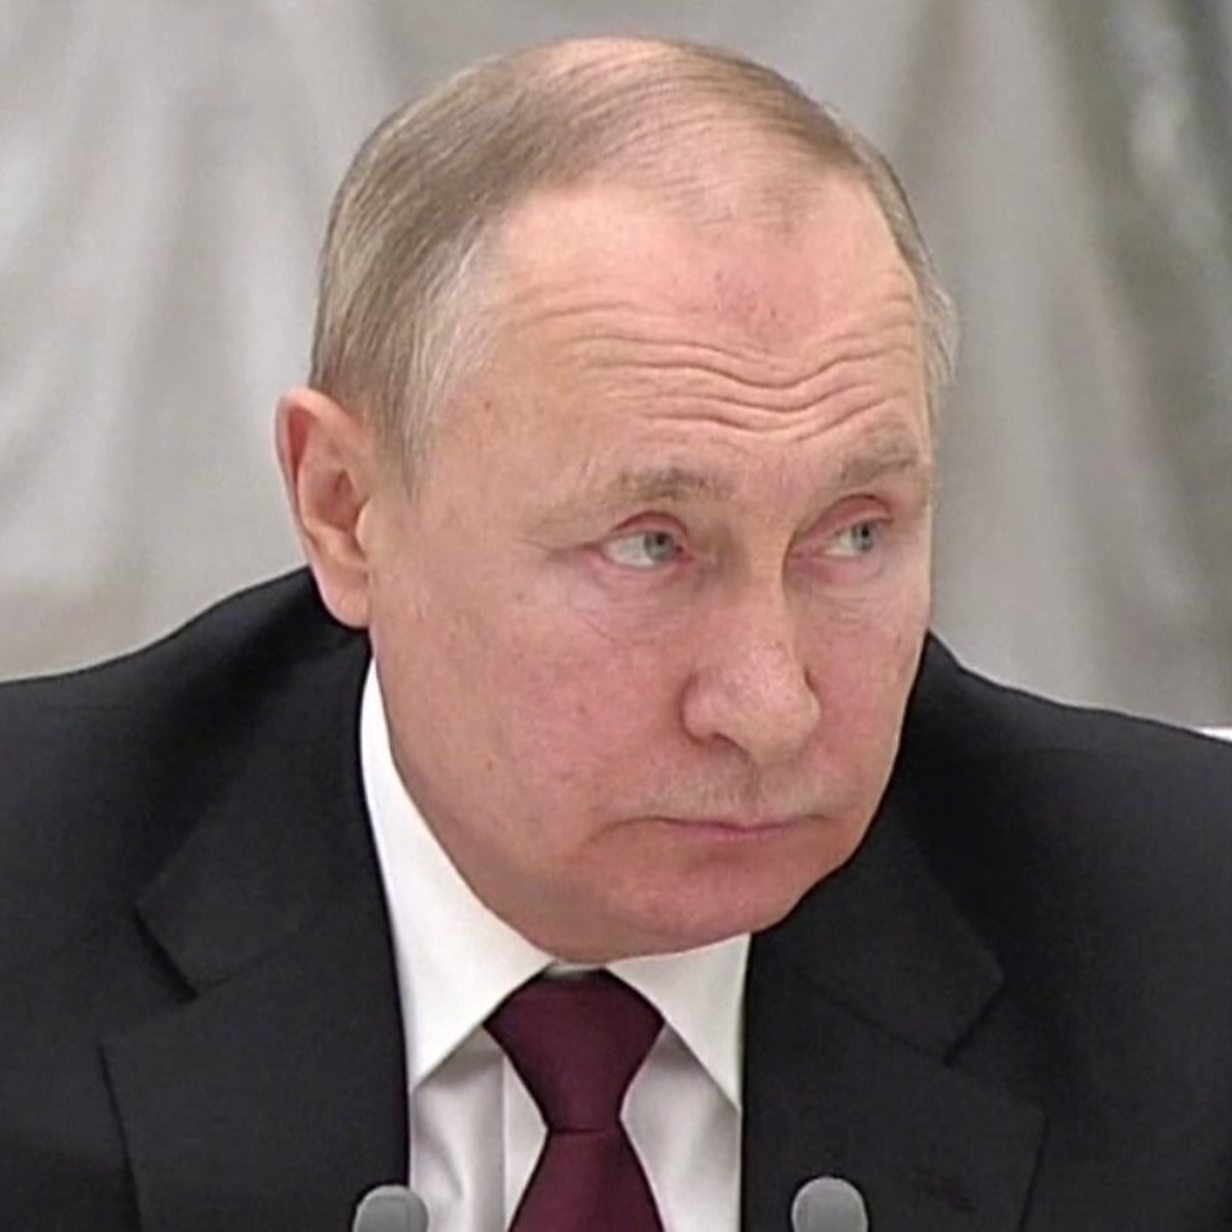 Ukraine Putin tells Russias spy chief to speak plainly